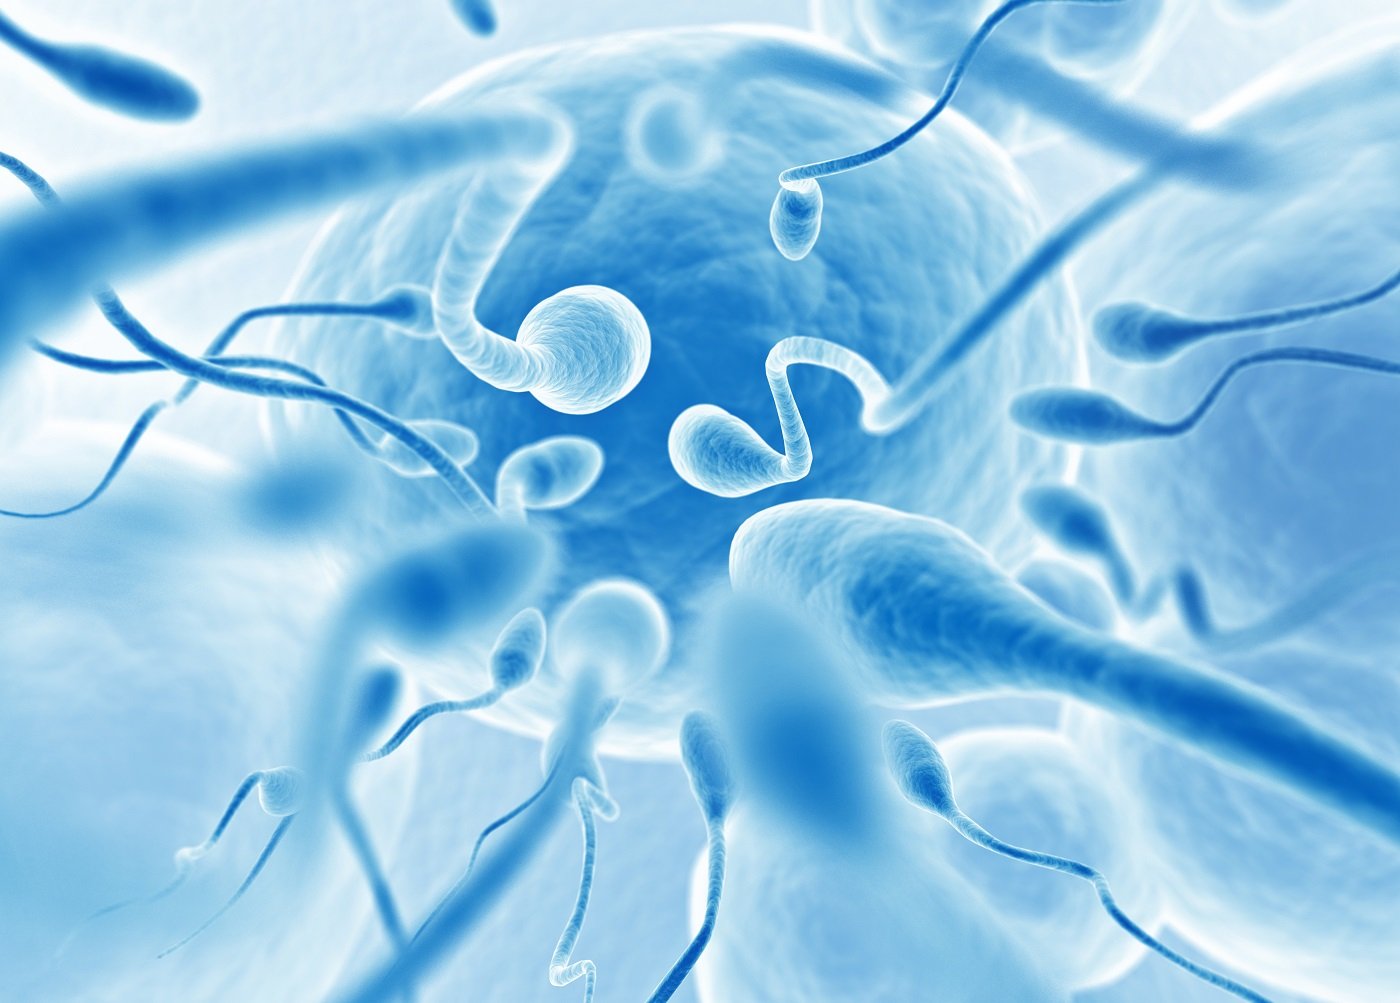 Male Infertility Treatment In Chennai